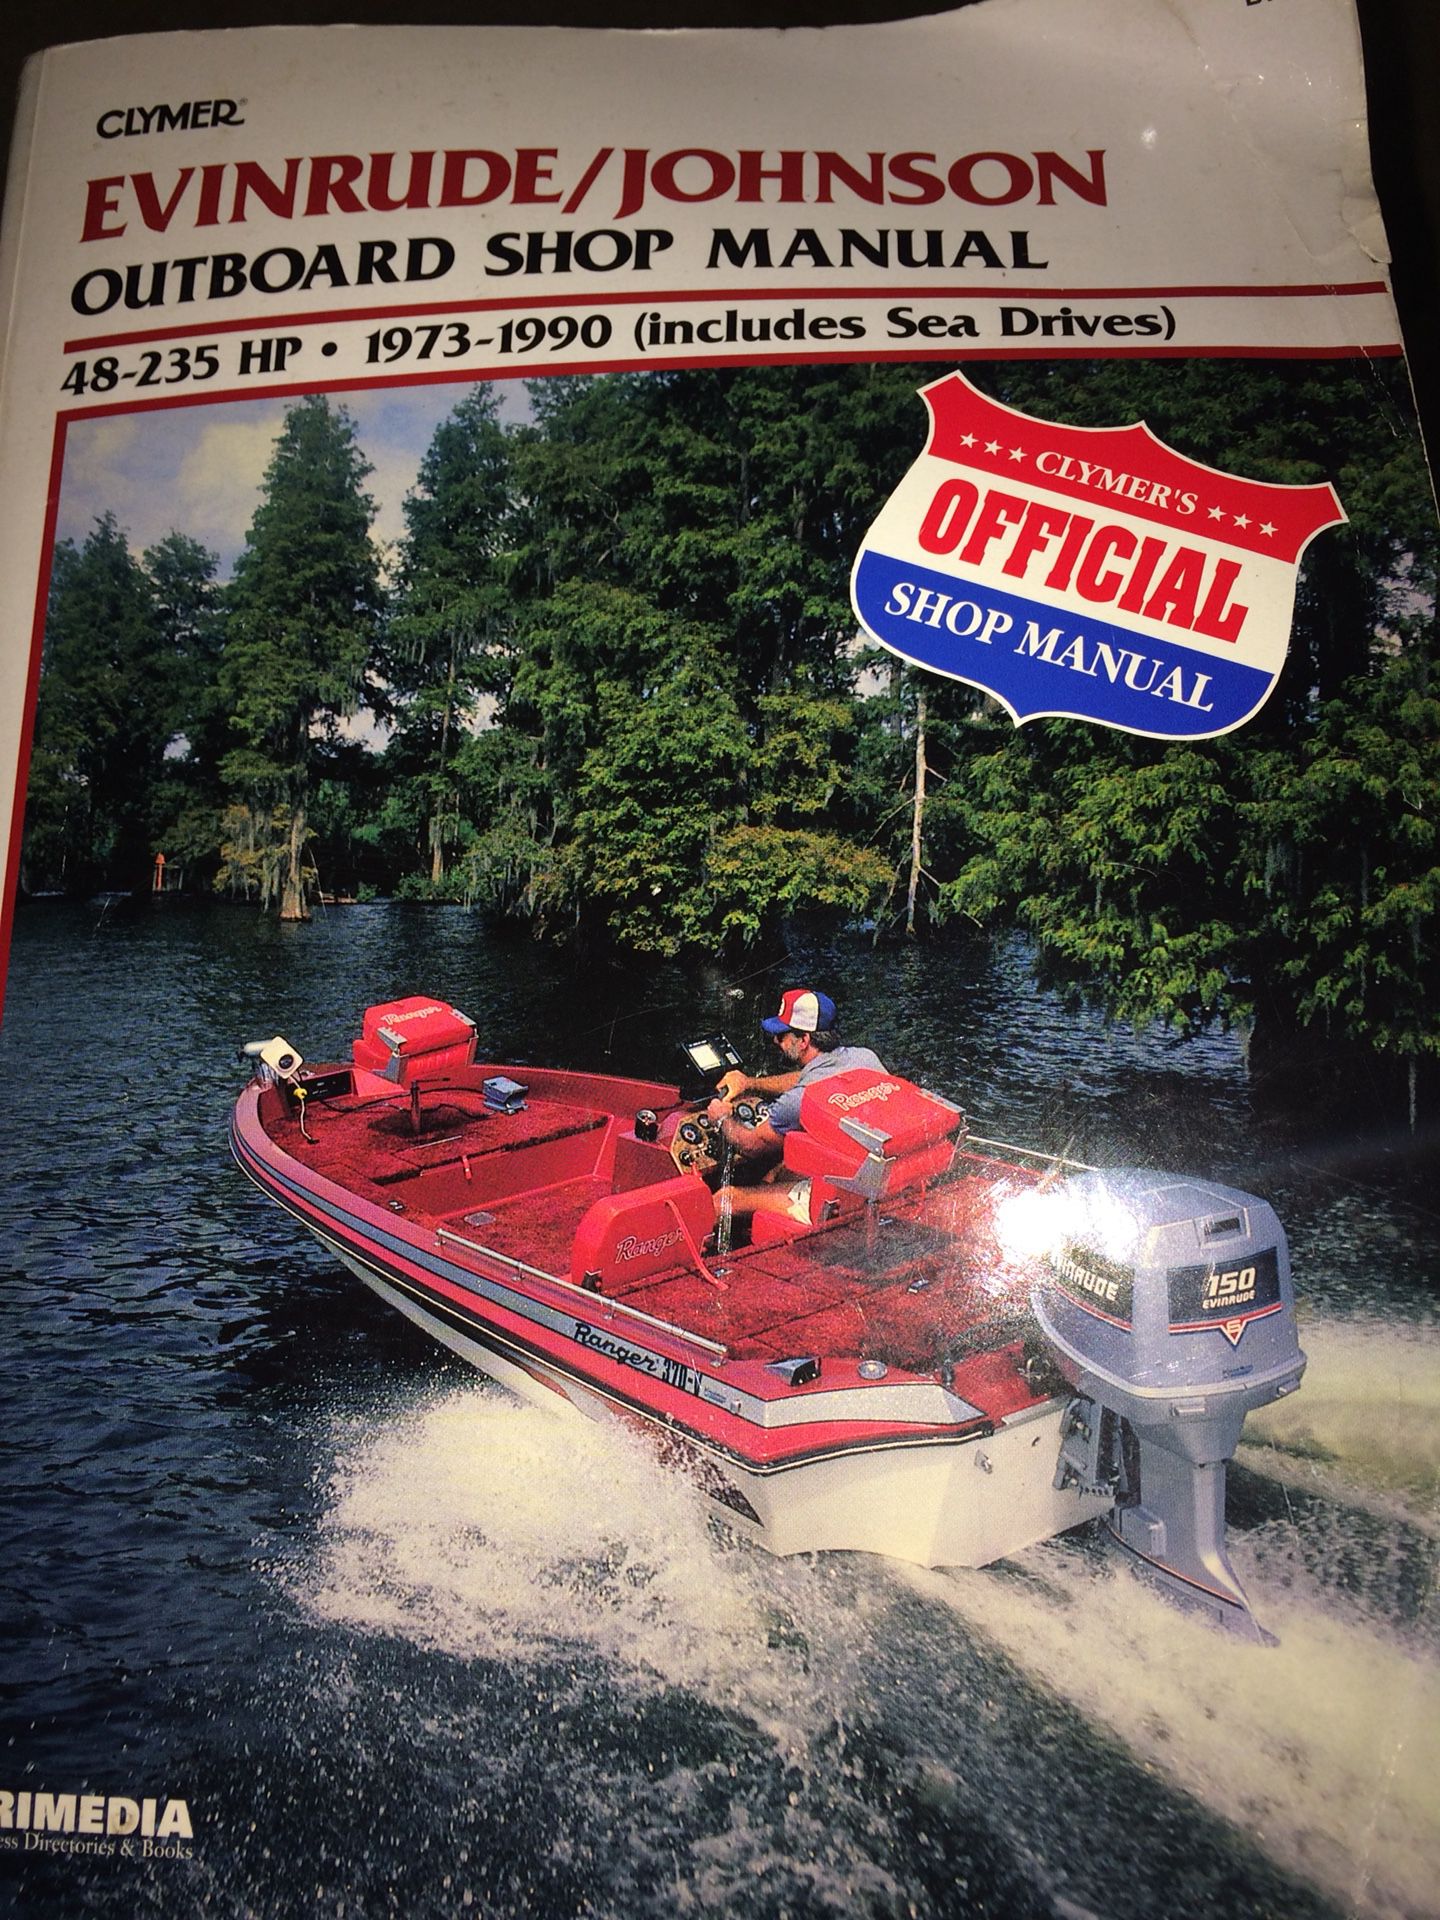 Evinrude outboard shop manual 1974-1990